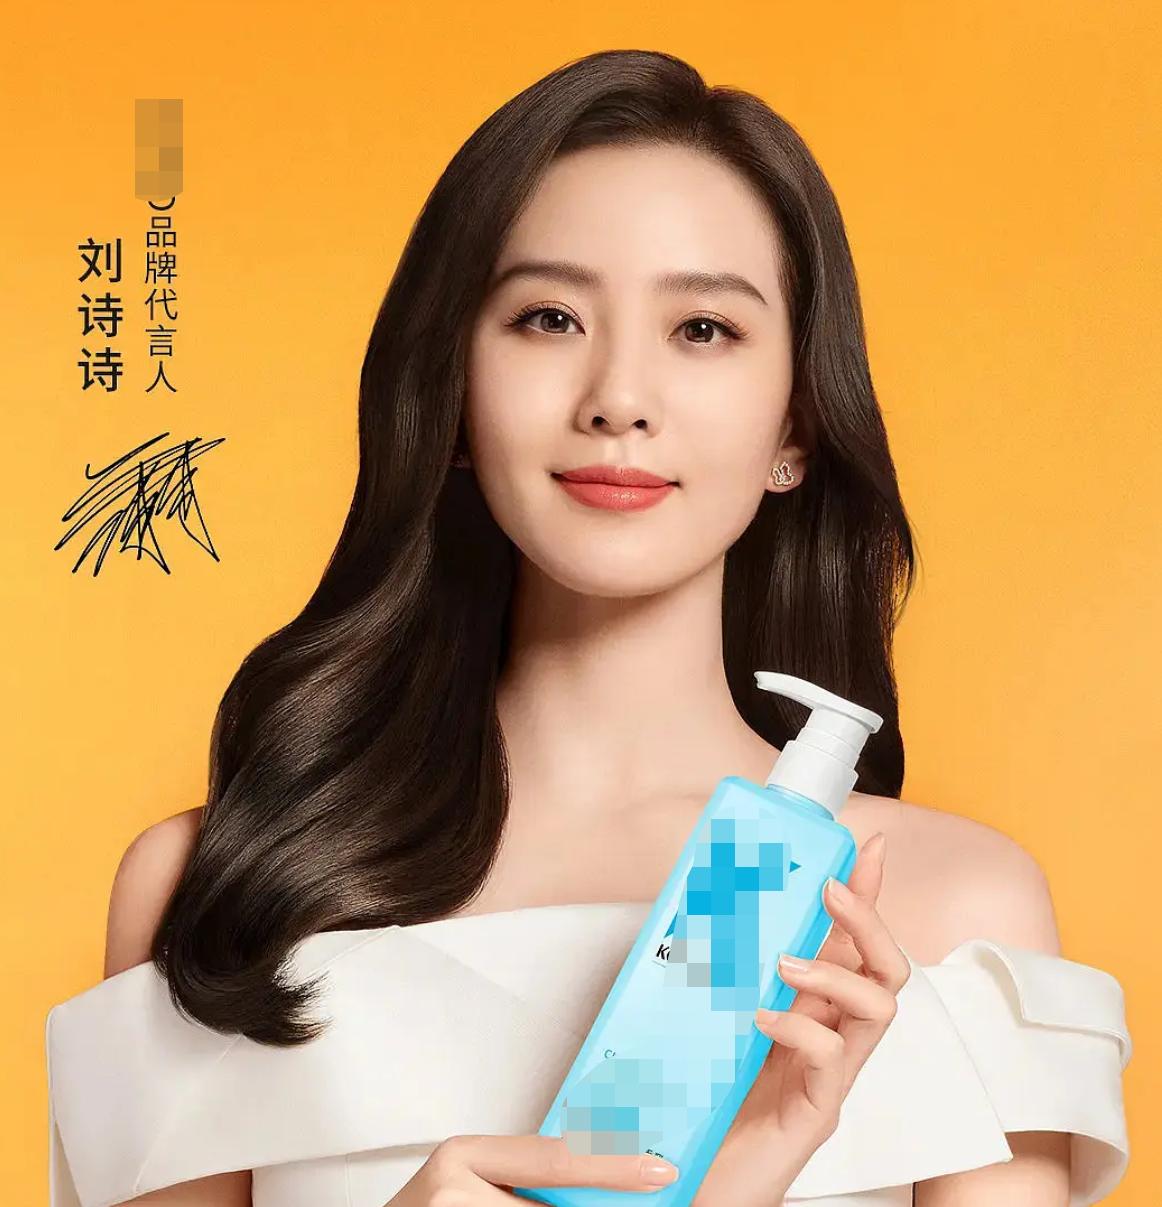 Ma Yili endorsed the brand as soon as Liu Shishi had an accident ...